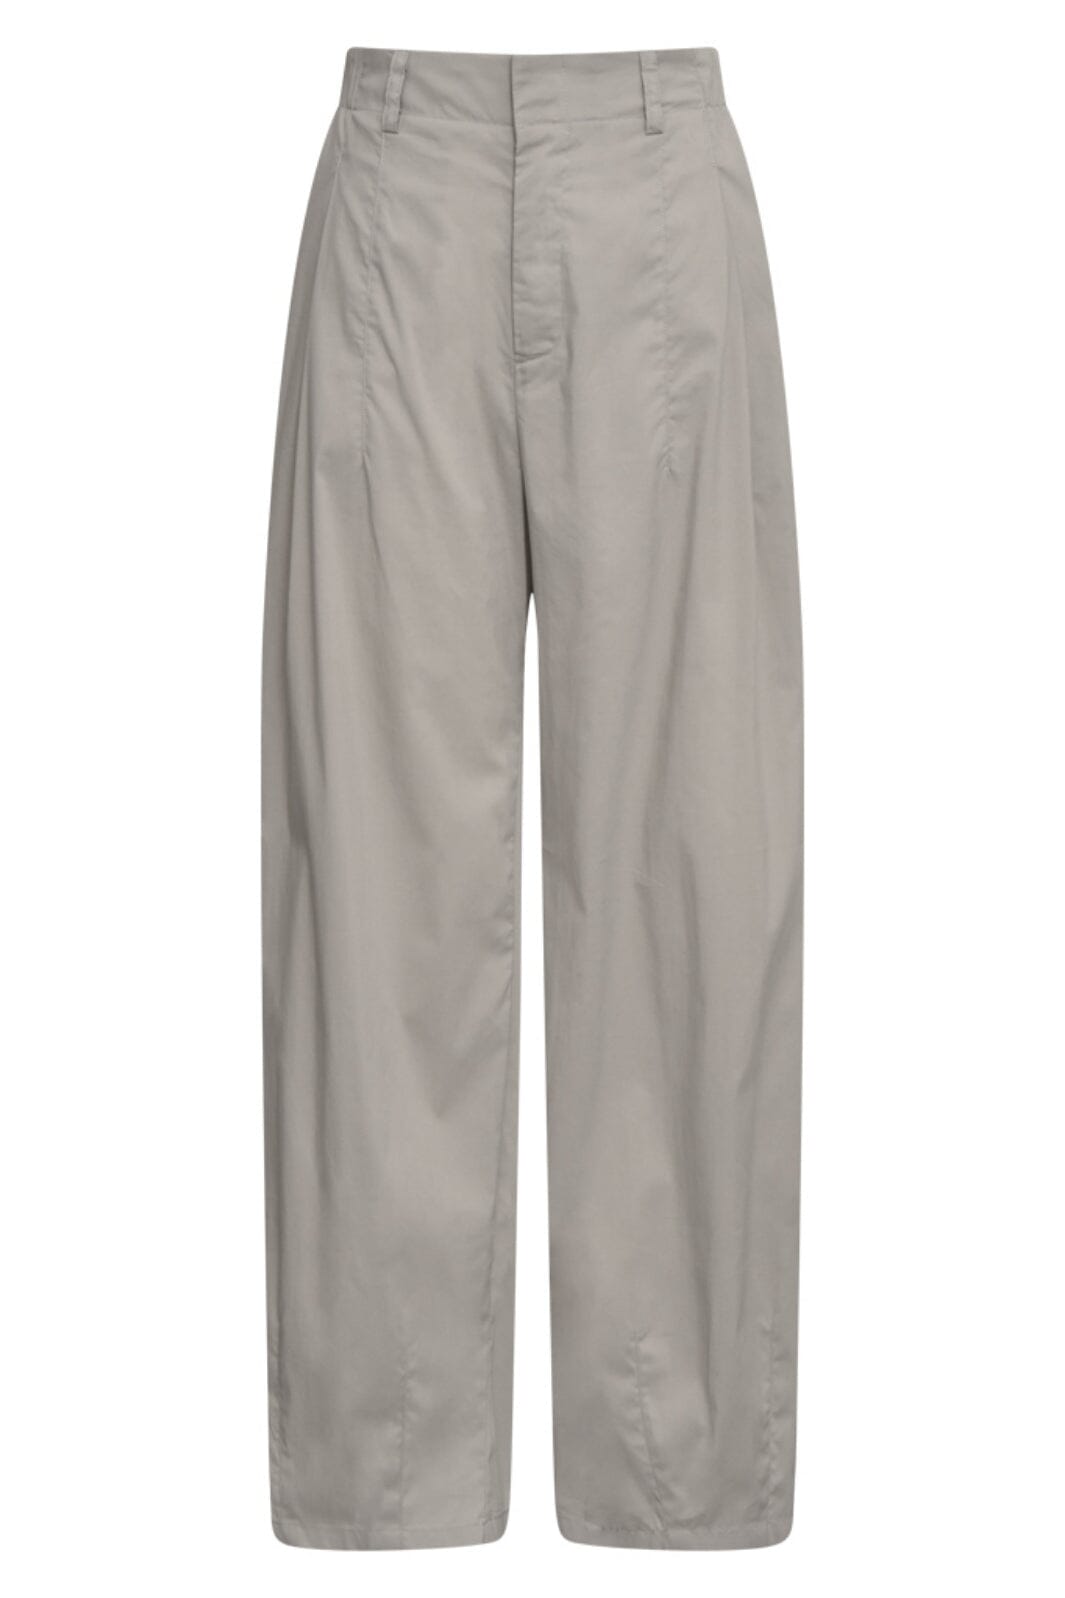 Gossia - Assikago Pants - Light Grey Bukser 